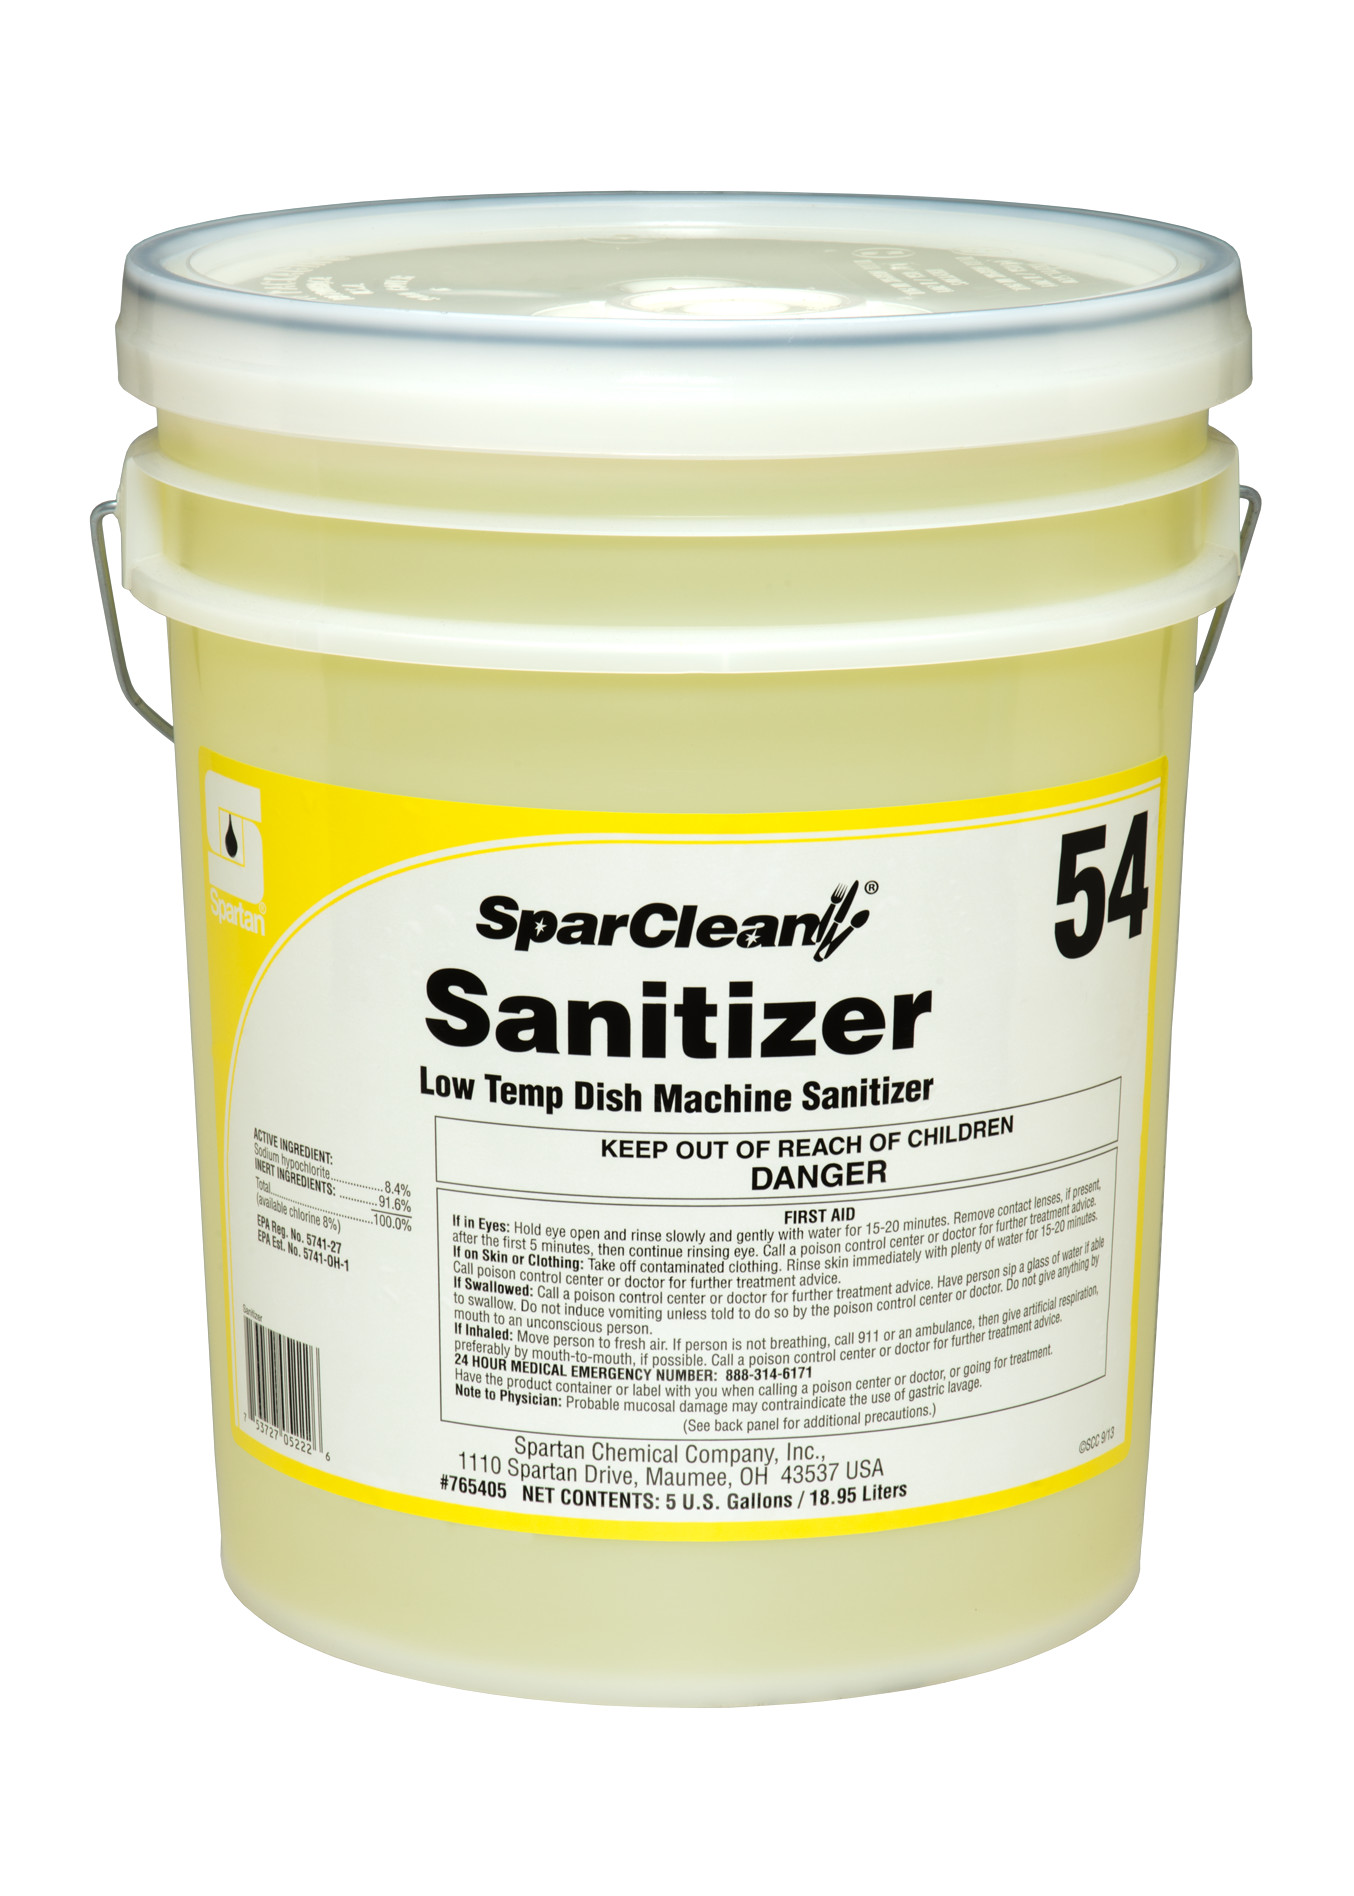 Spartan Chemical Company SparClean Sanitizer 54, 5 GAL PAIL